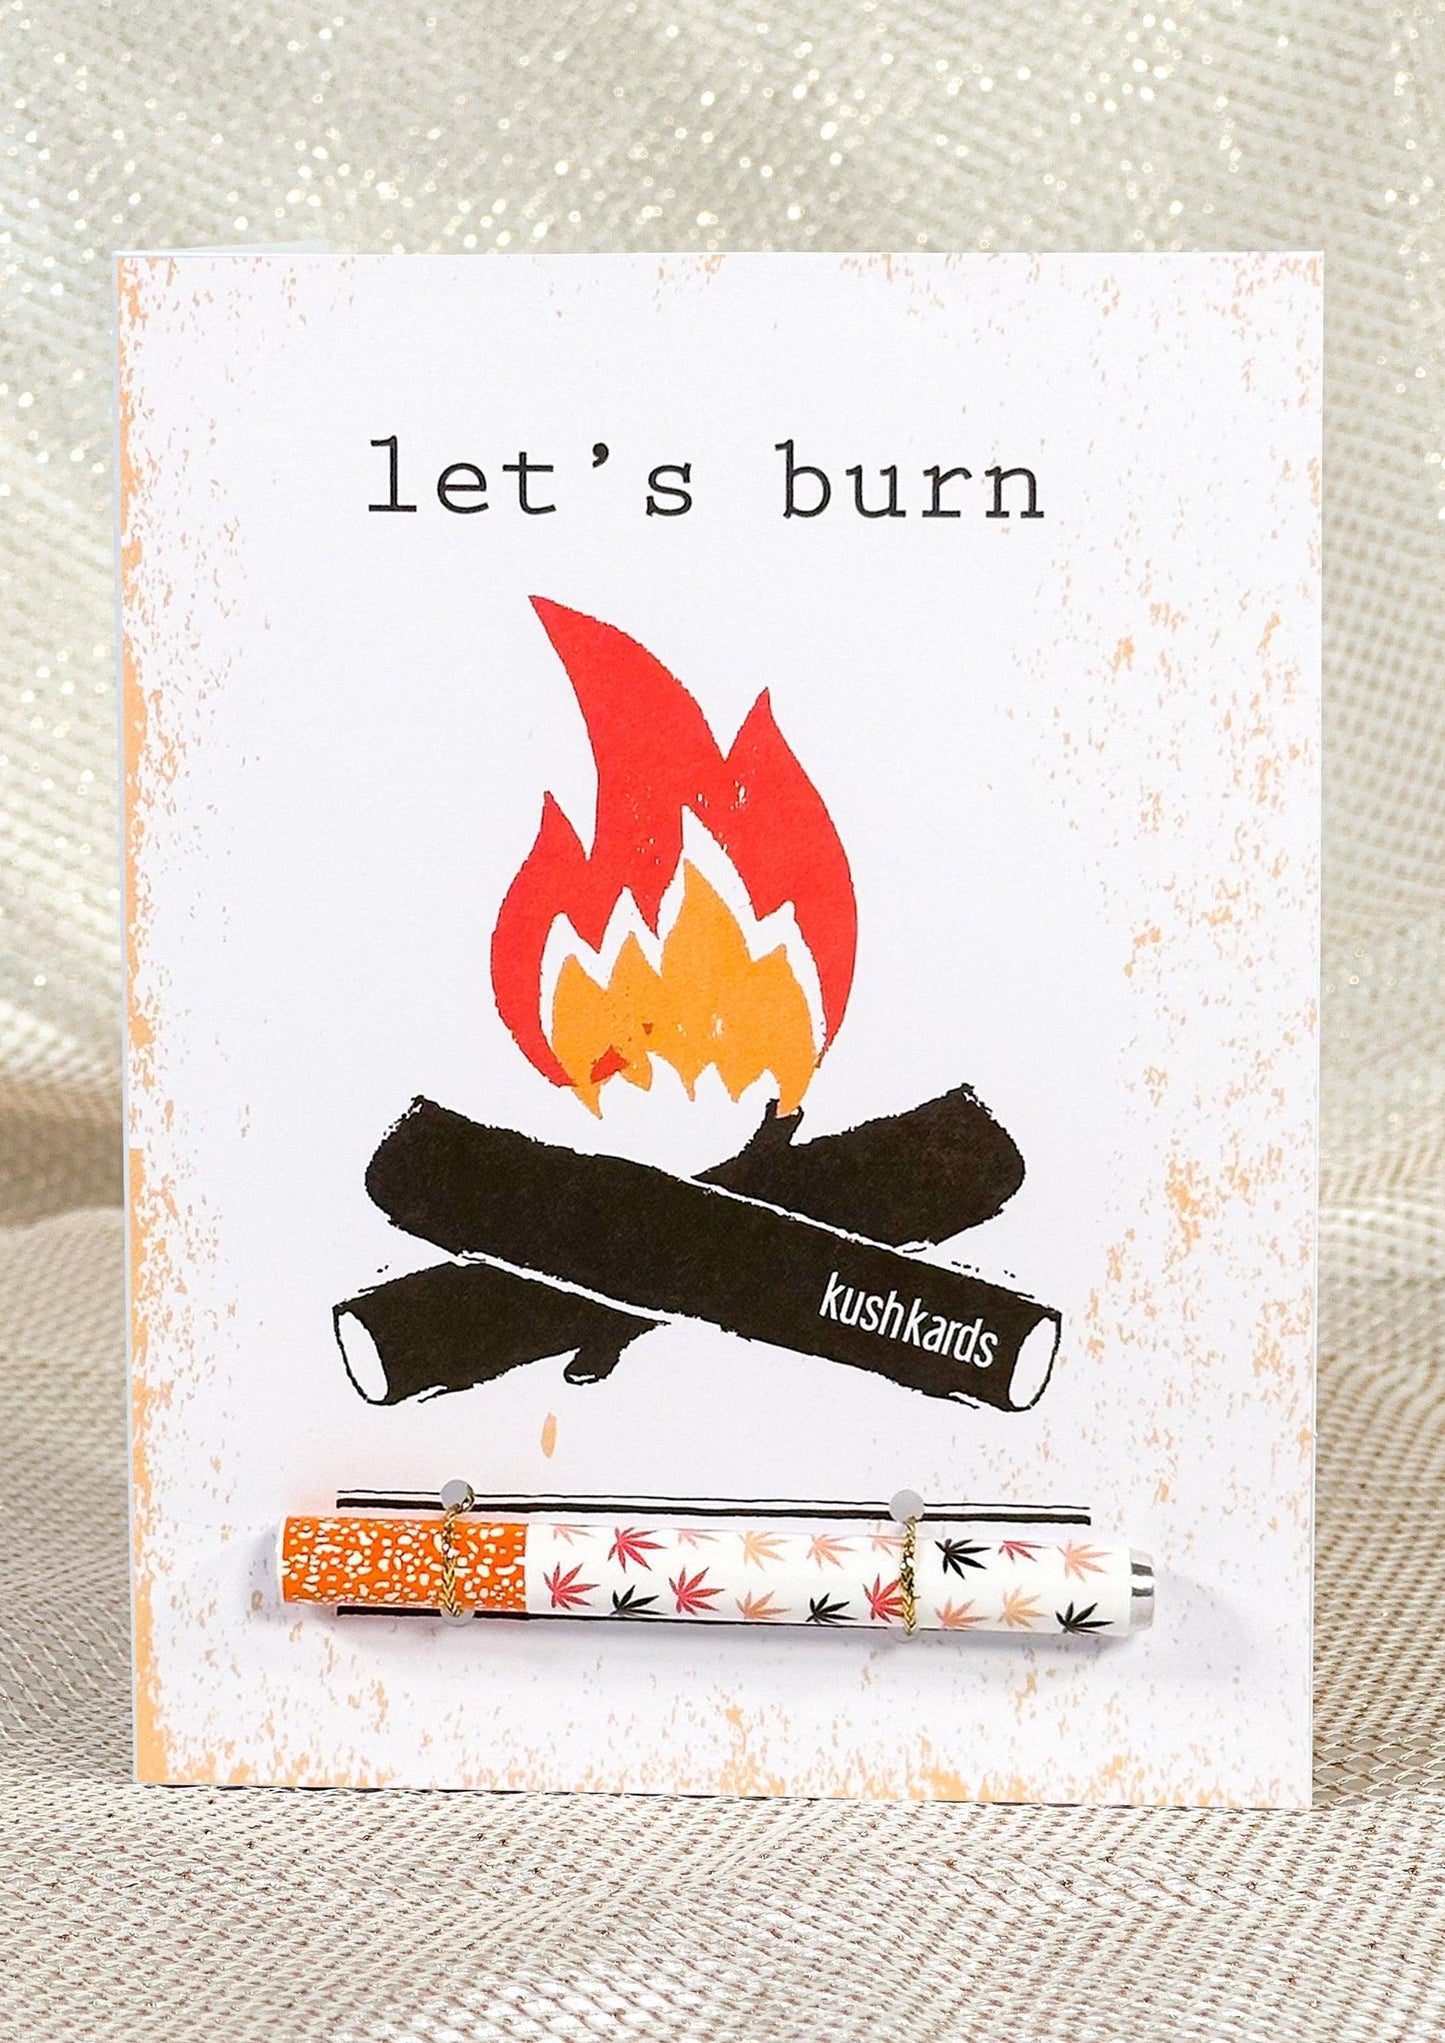 KushKards Greeting Cards 🔥 Let's Burn Cannabis Greeting Card